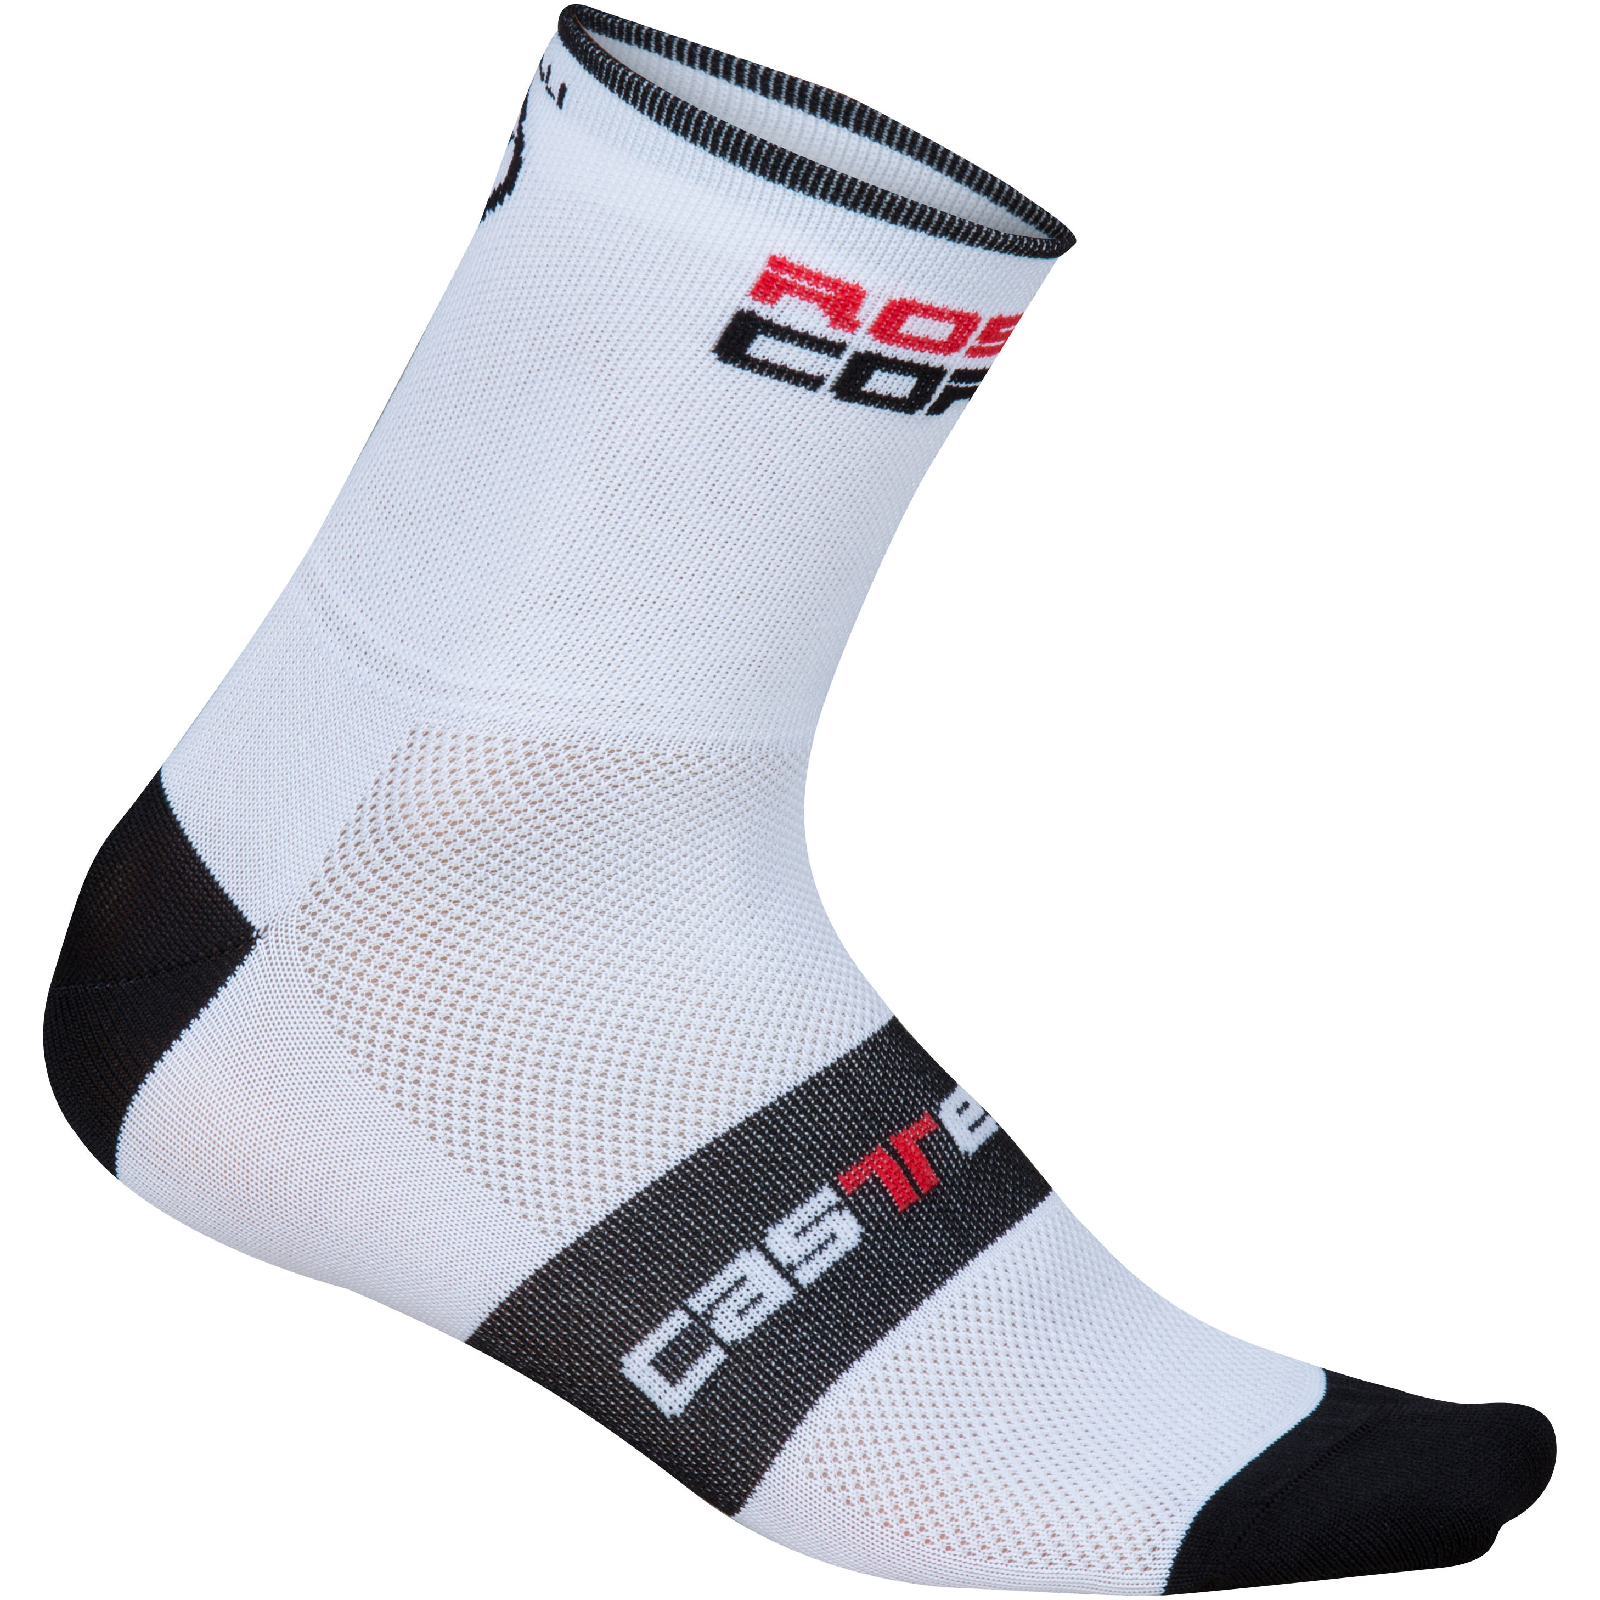 Castelli Rosso Corsa 9 Cycling Socks - White | ProBikeKit UK